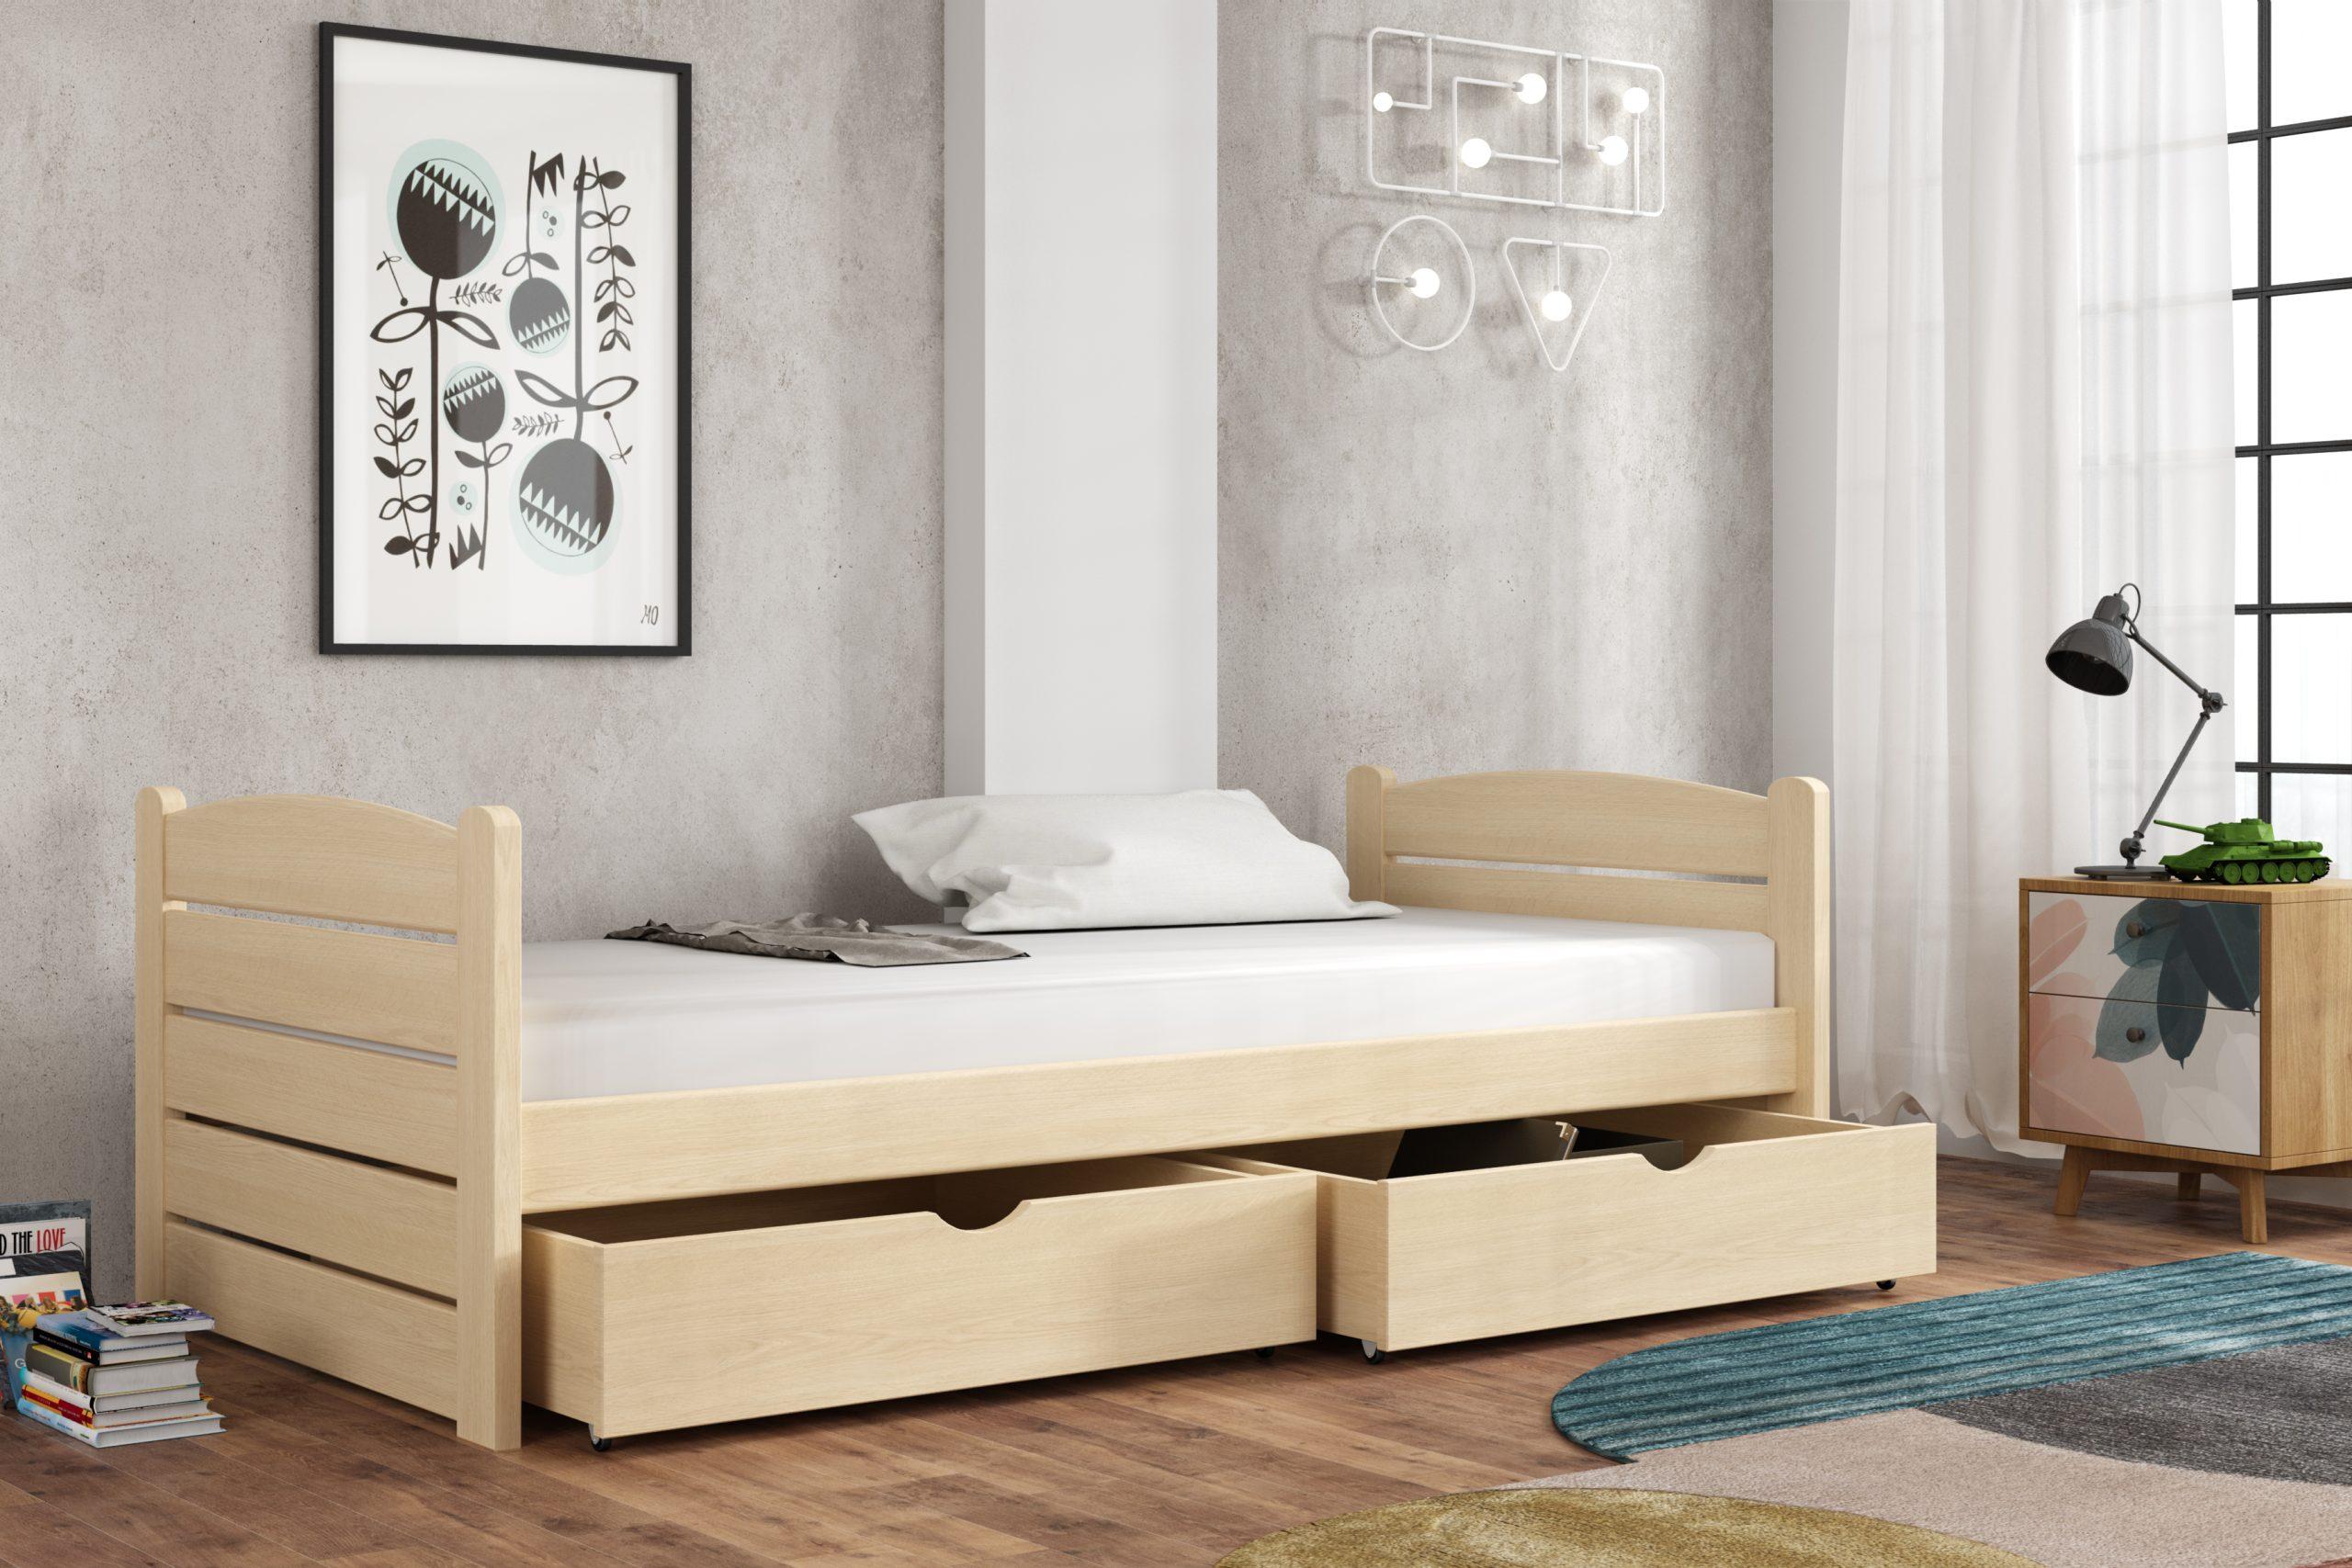 Dětská postel UNDO KIDBED ONE ze dřeva + rošt Barva: bezbarvý lak, Rozměr: 80 x 200 cm, Zásuvky: ano